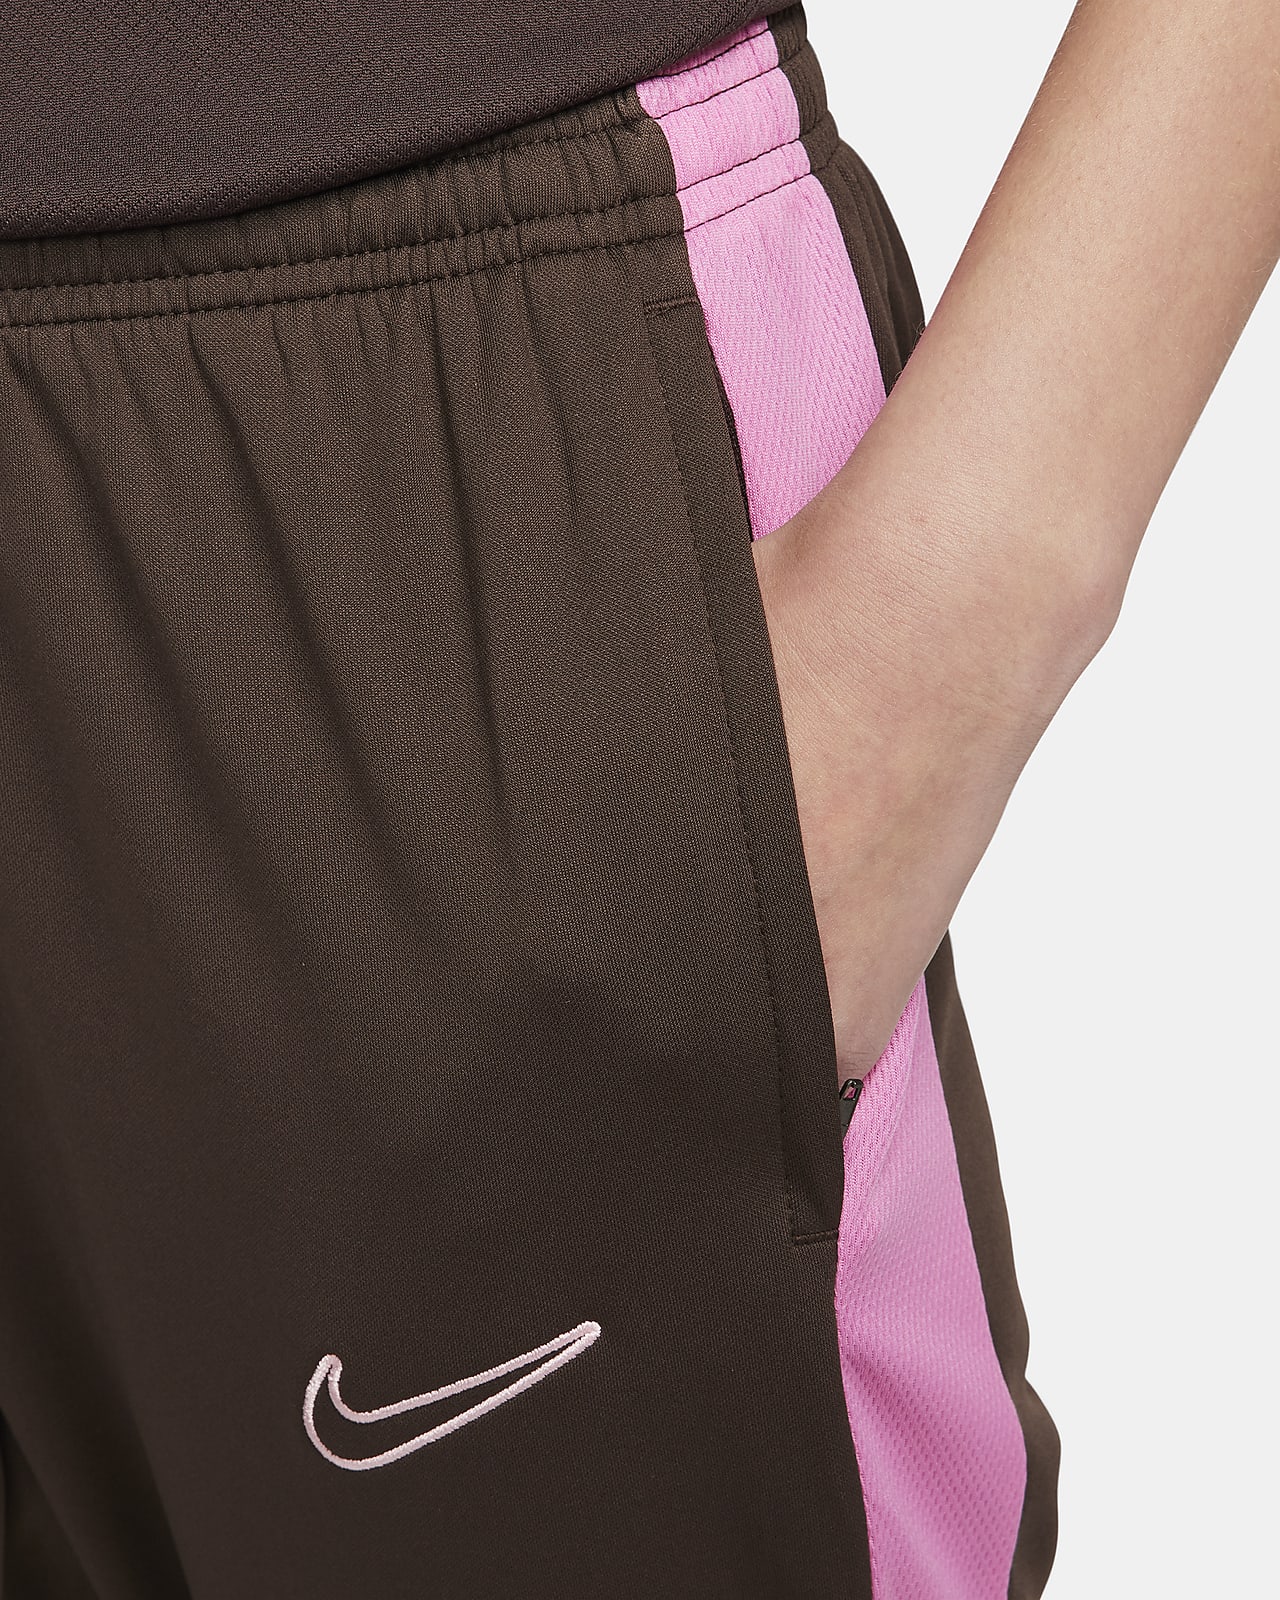 Pants de fútbol para mujer Nike Dri-FIT Academy